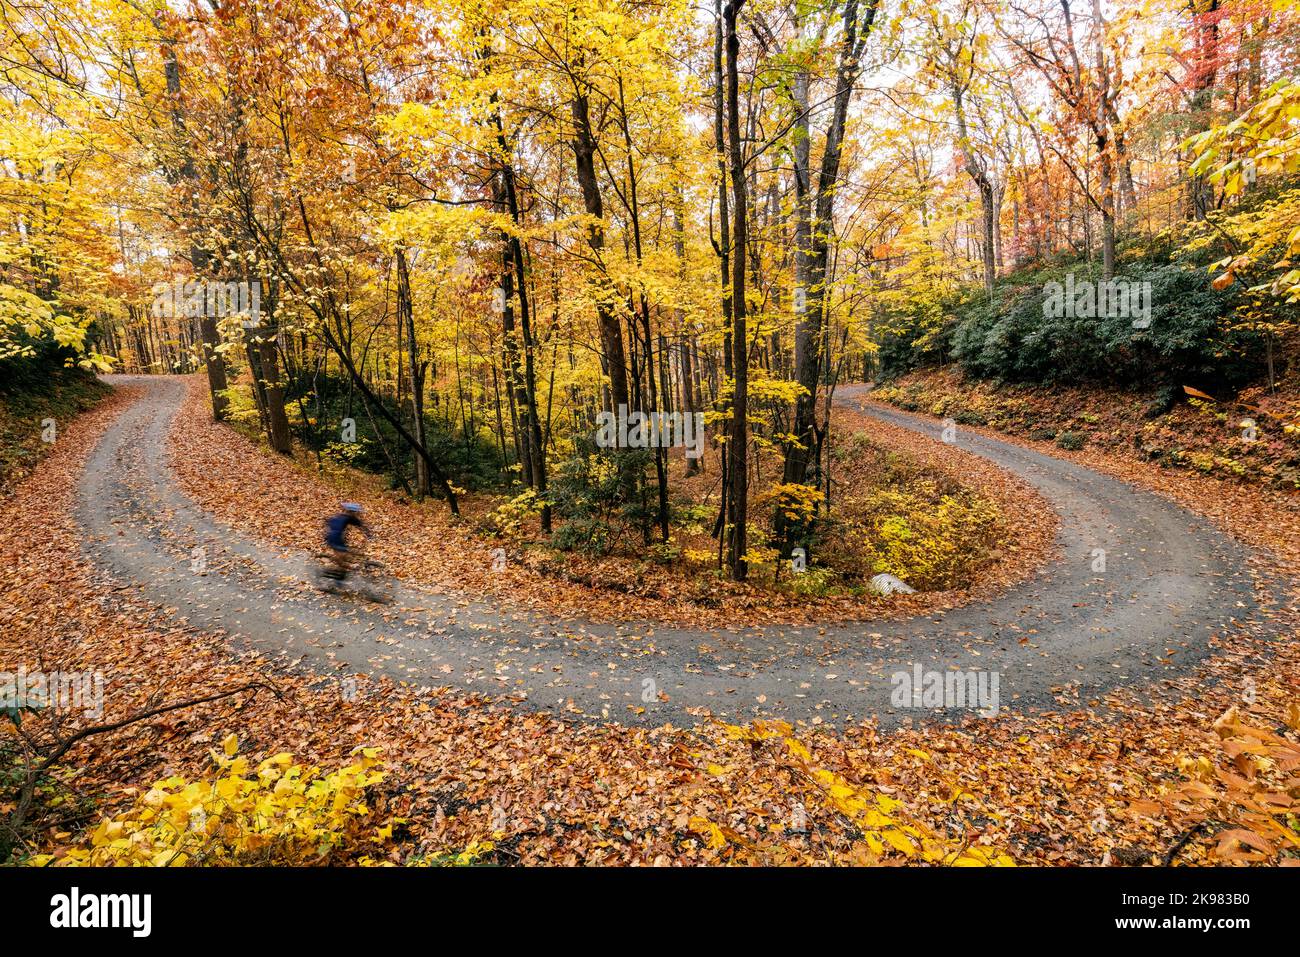 Cyclist on winding gravel road through vibrant fall foliage in Pisgah National Forest, Brevard, North Carolina, USA Stock Photo